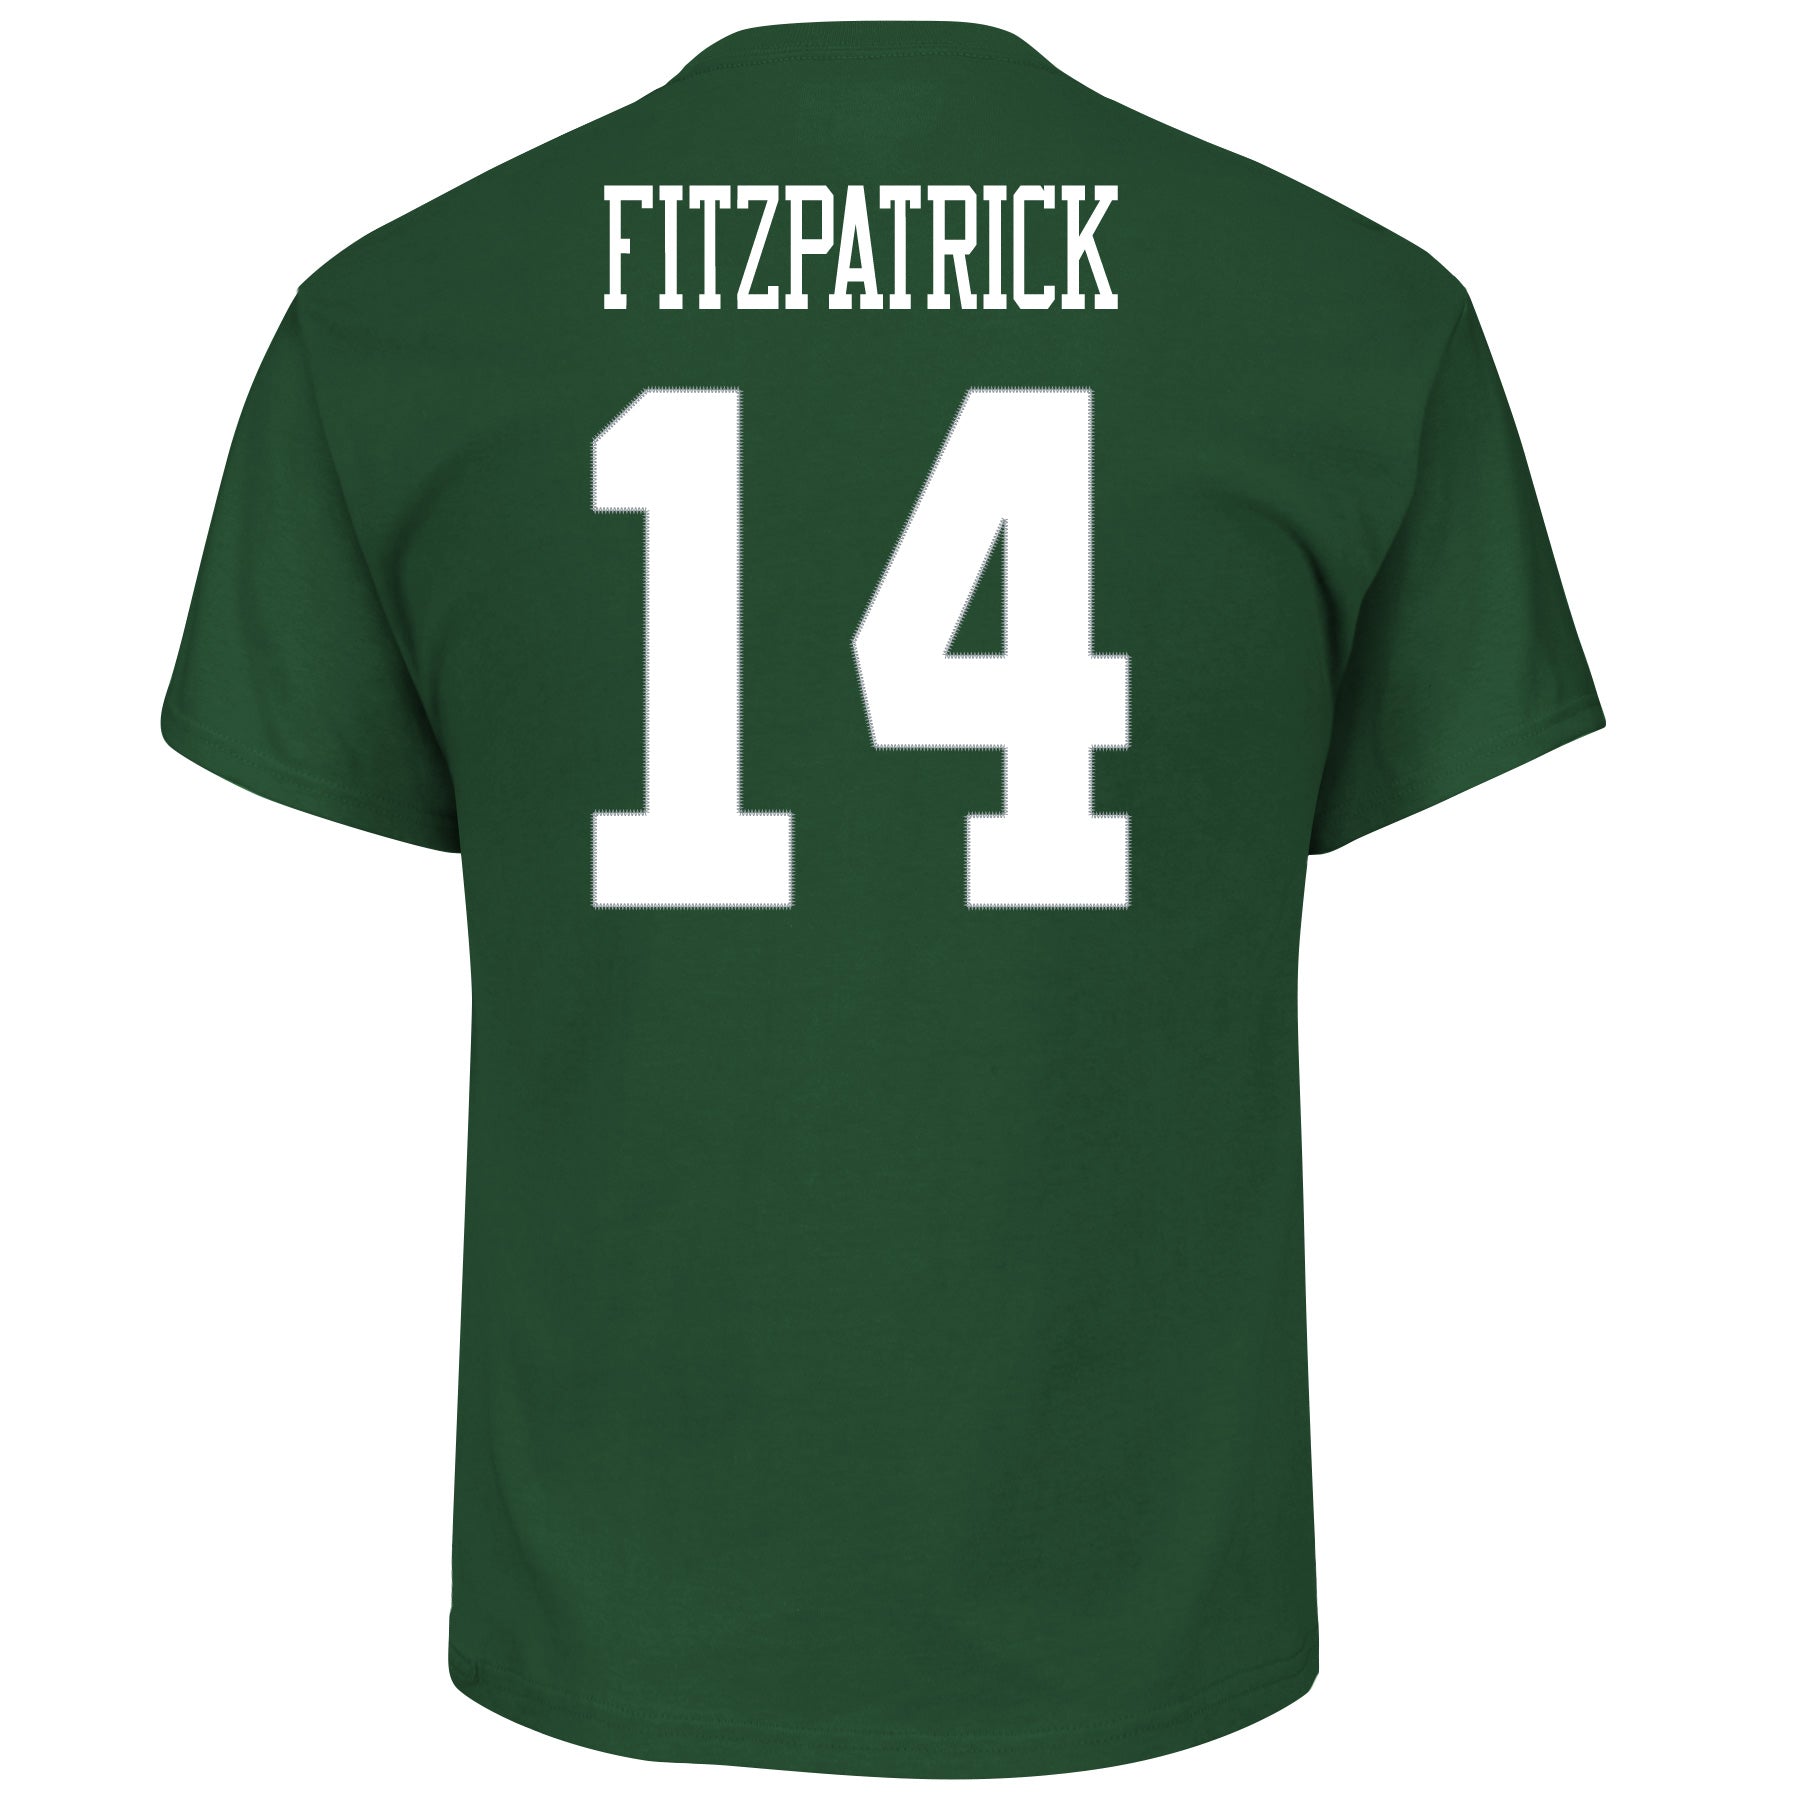 fitzpatrick jets shirt